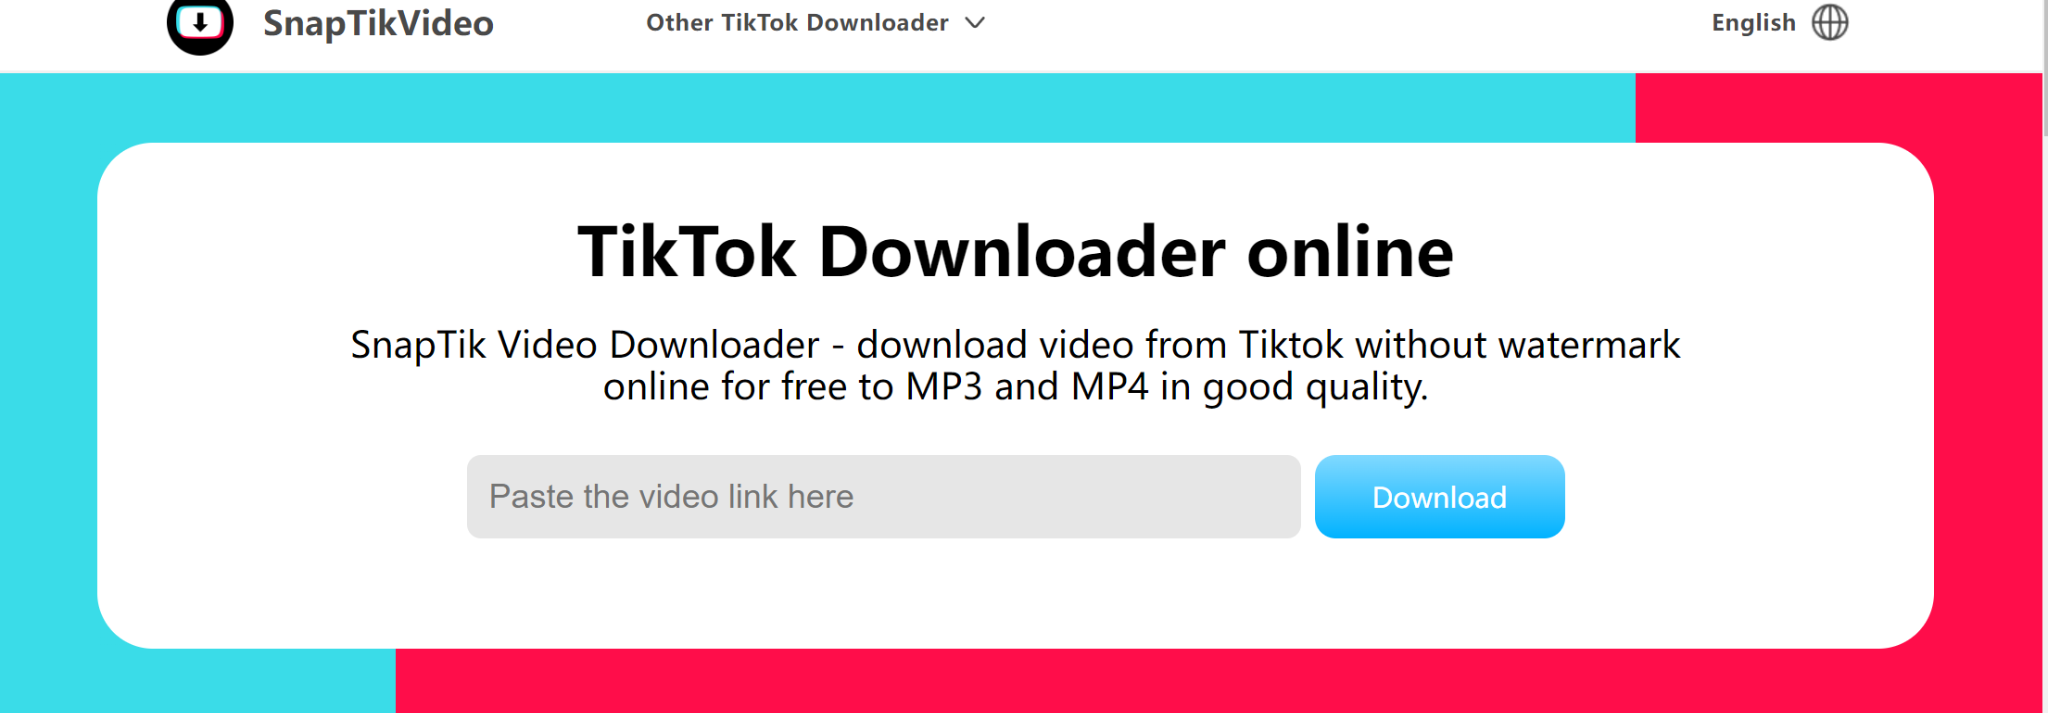 Using SnapTikVideo to Download TikTok Videos on PC